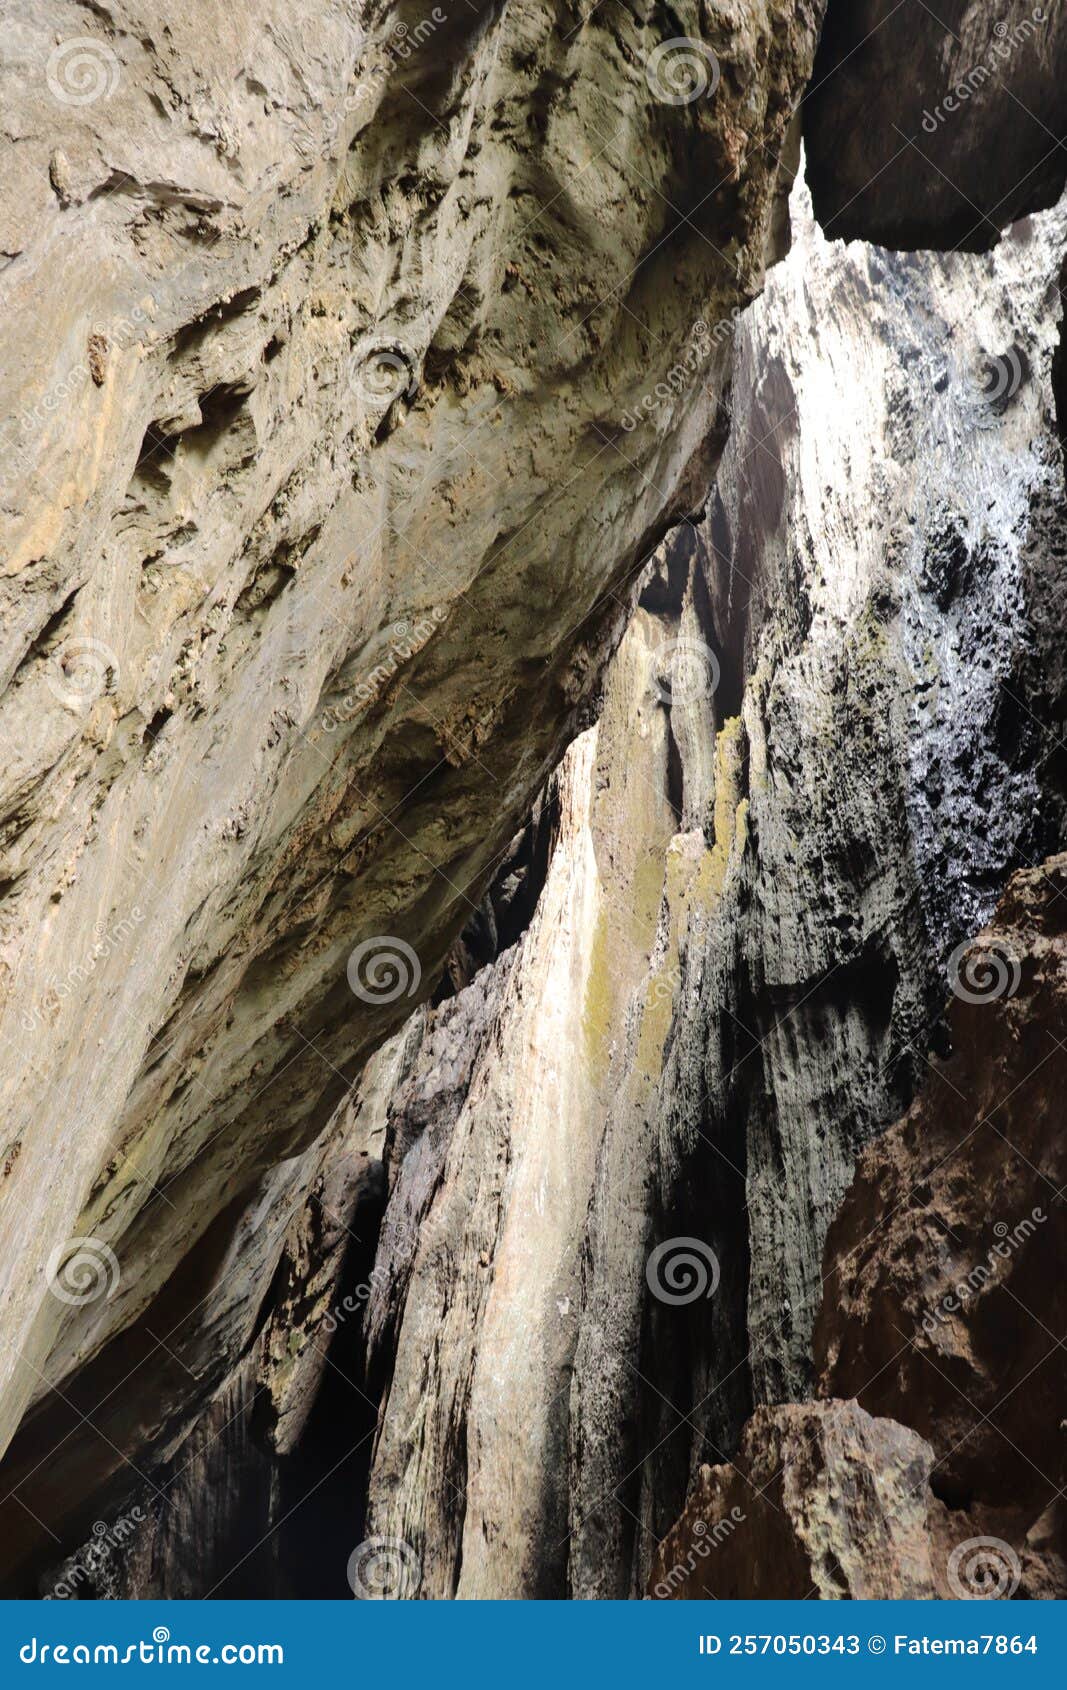 yana caves - karnataka tourism - india adventure trip - hindu mythology